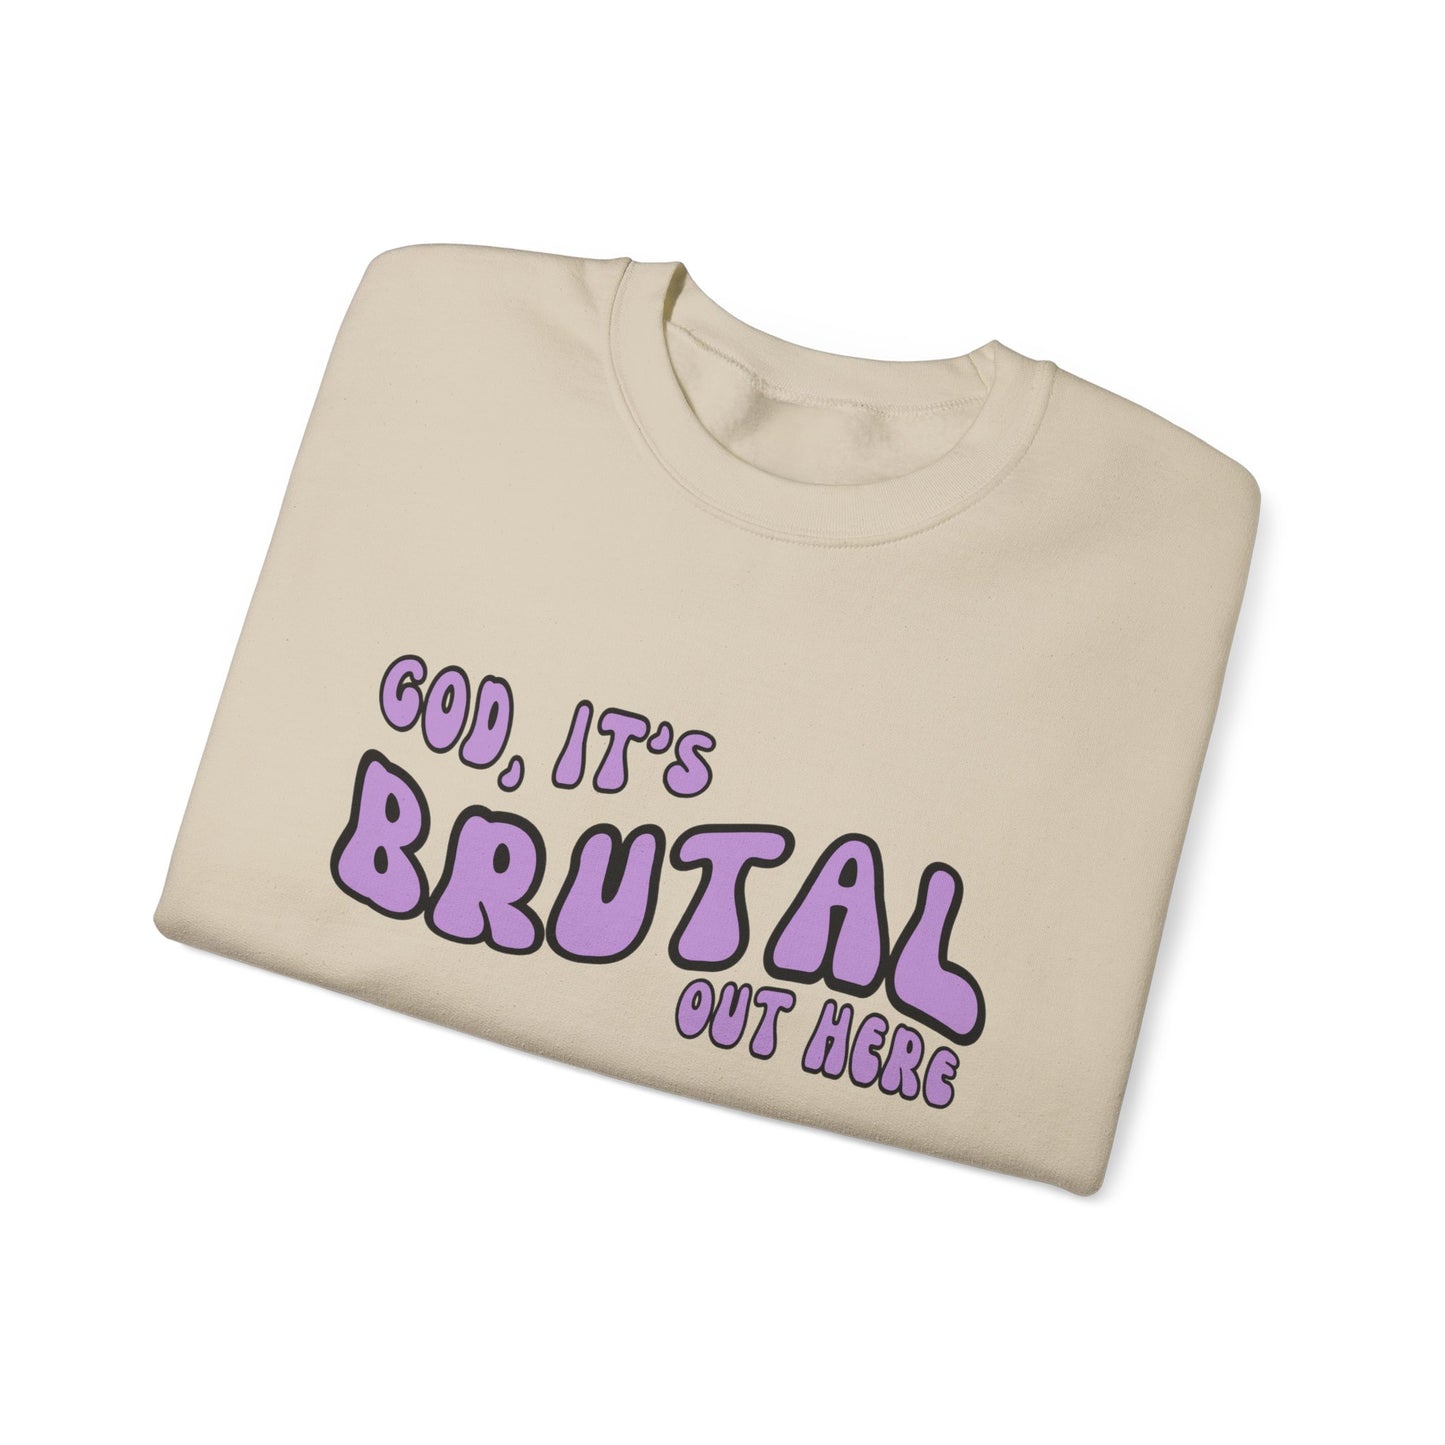 God Its Brutal Out Here Sweatshirt, Olivia Rodrigo Merch, Olivia Rodrigo Sweatshirt, Olivia Rodrigo Guts, Guts Album